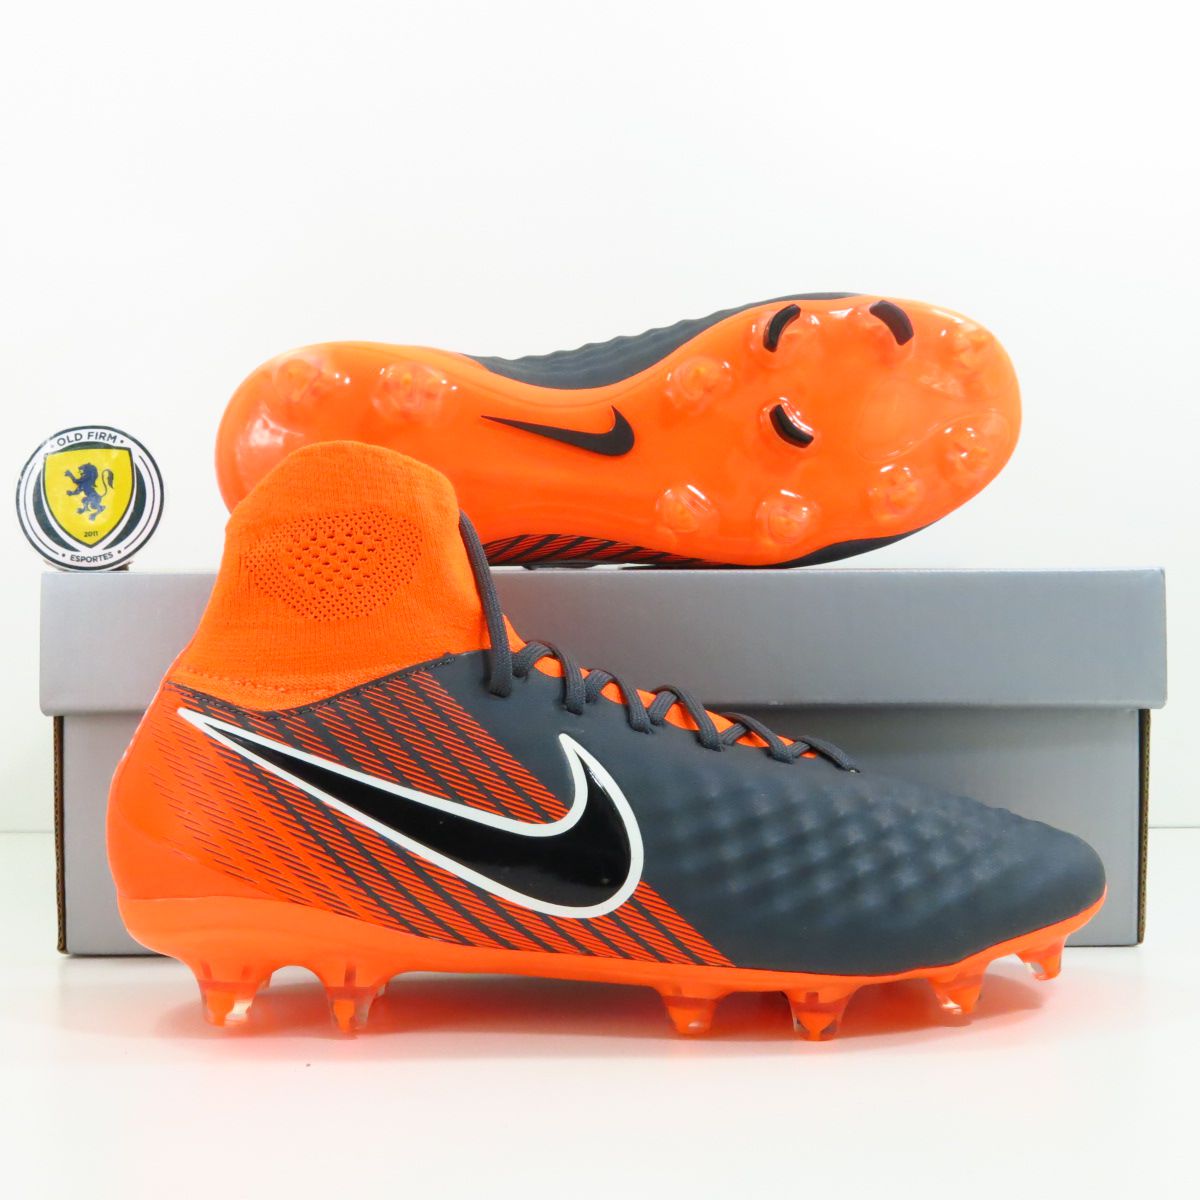 Nike Magista Obra II Pro – AH7308-080 – Football Boots | Old Firm Boots